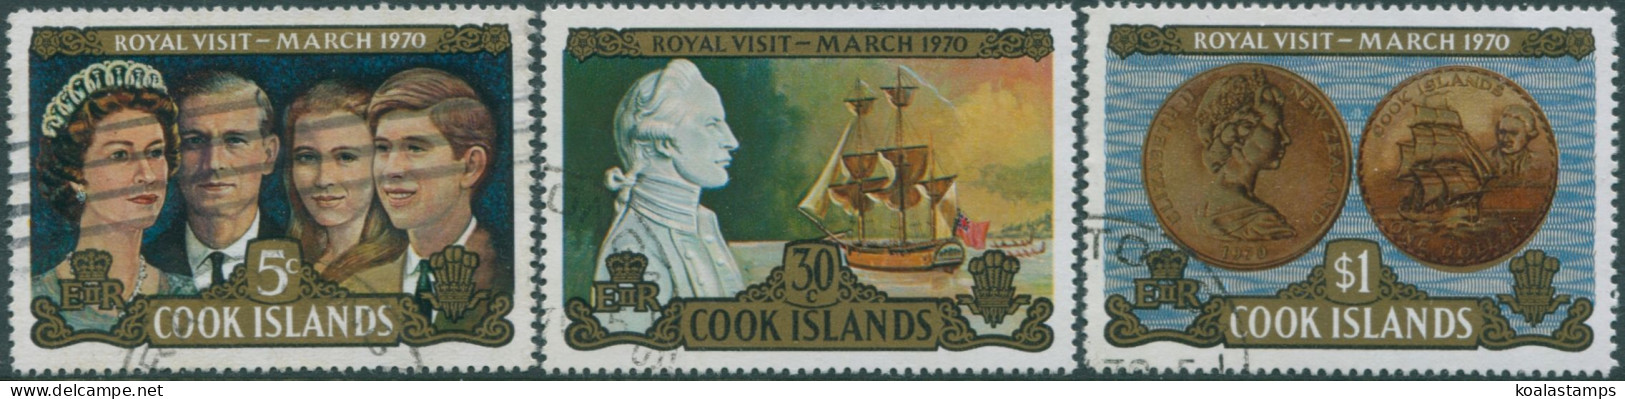 Cook Islands 1970 SG328-330 Royal Visit Set FU - Cookinseln